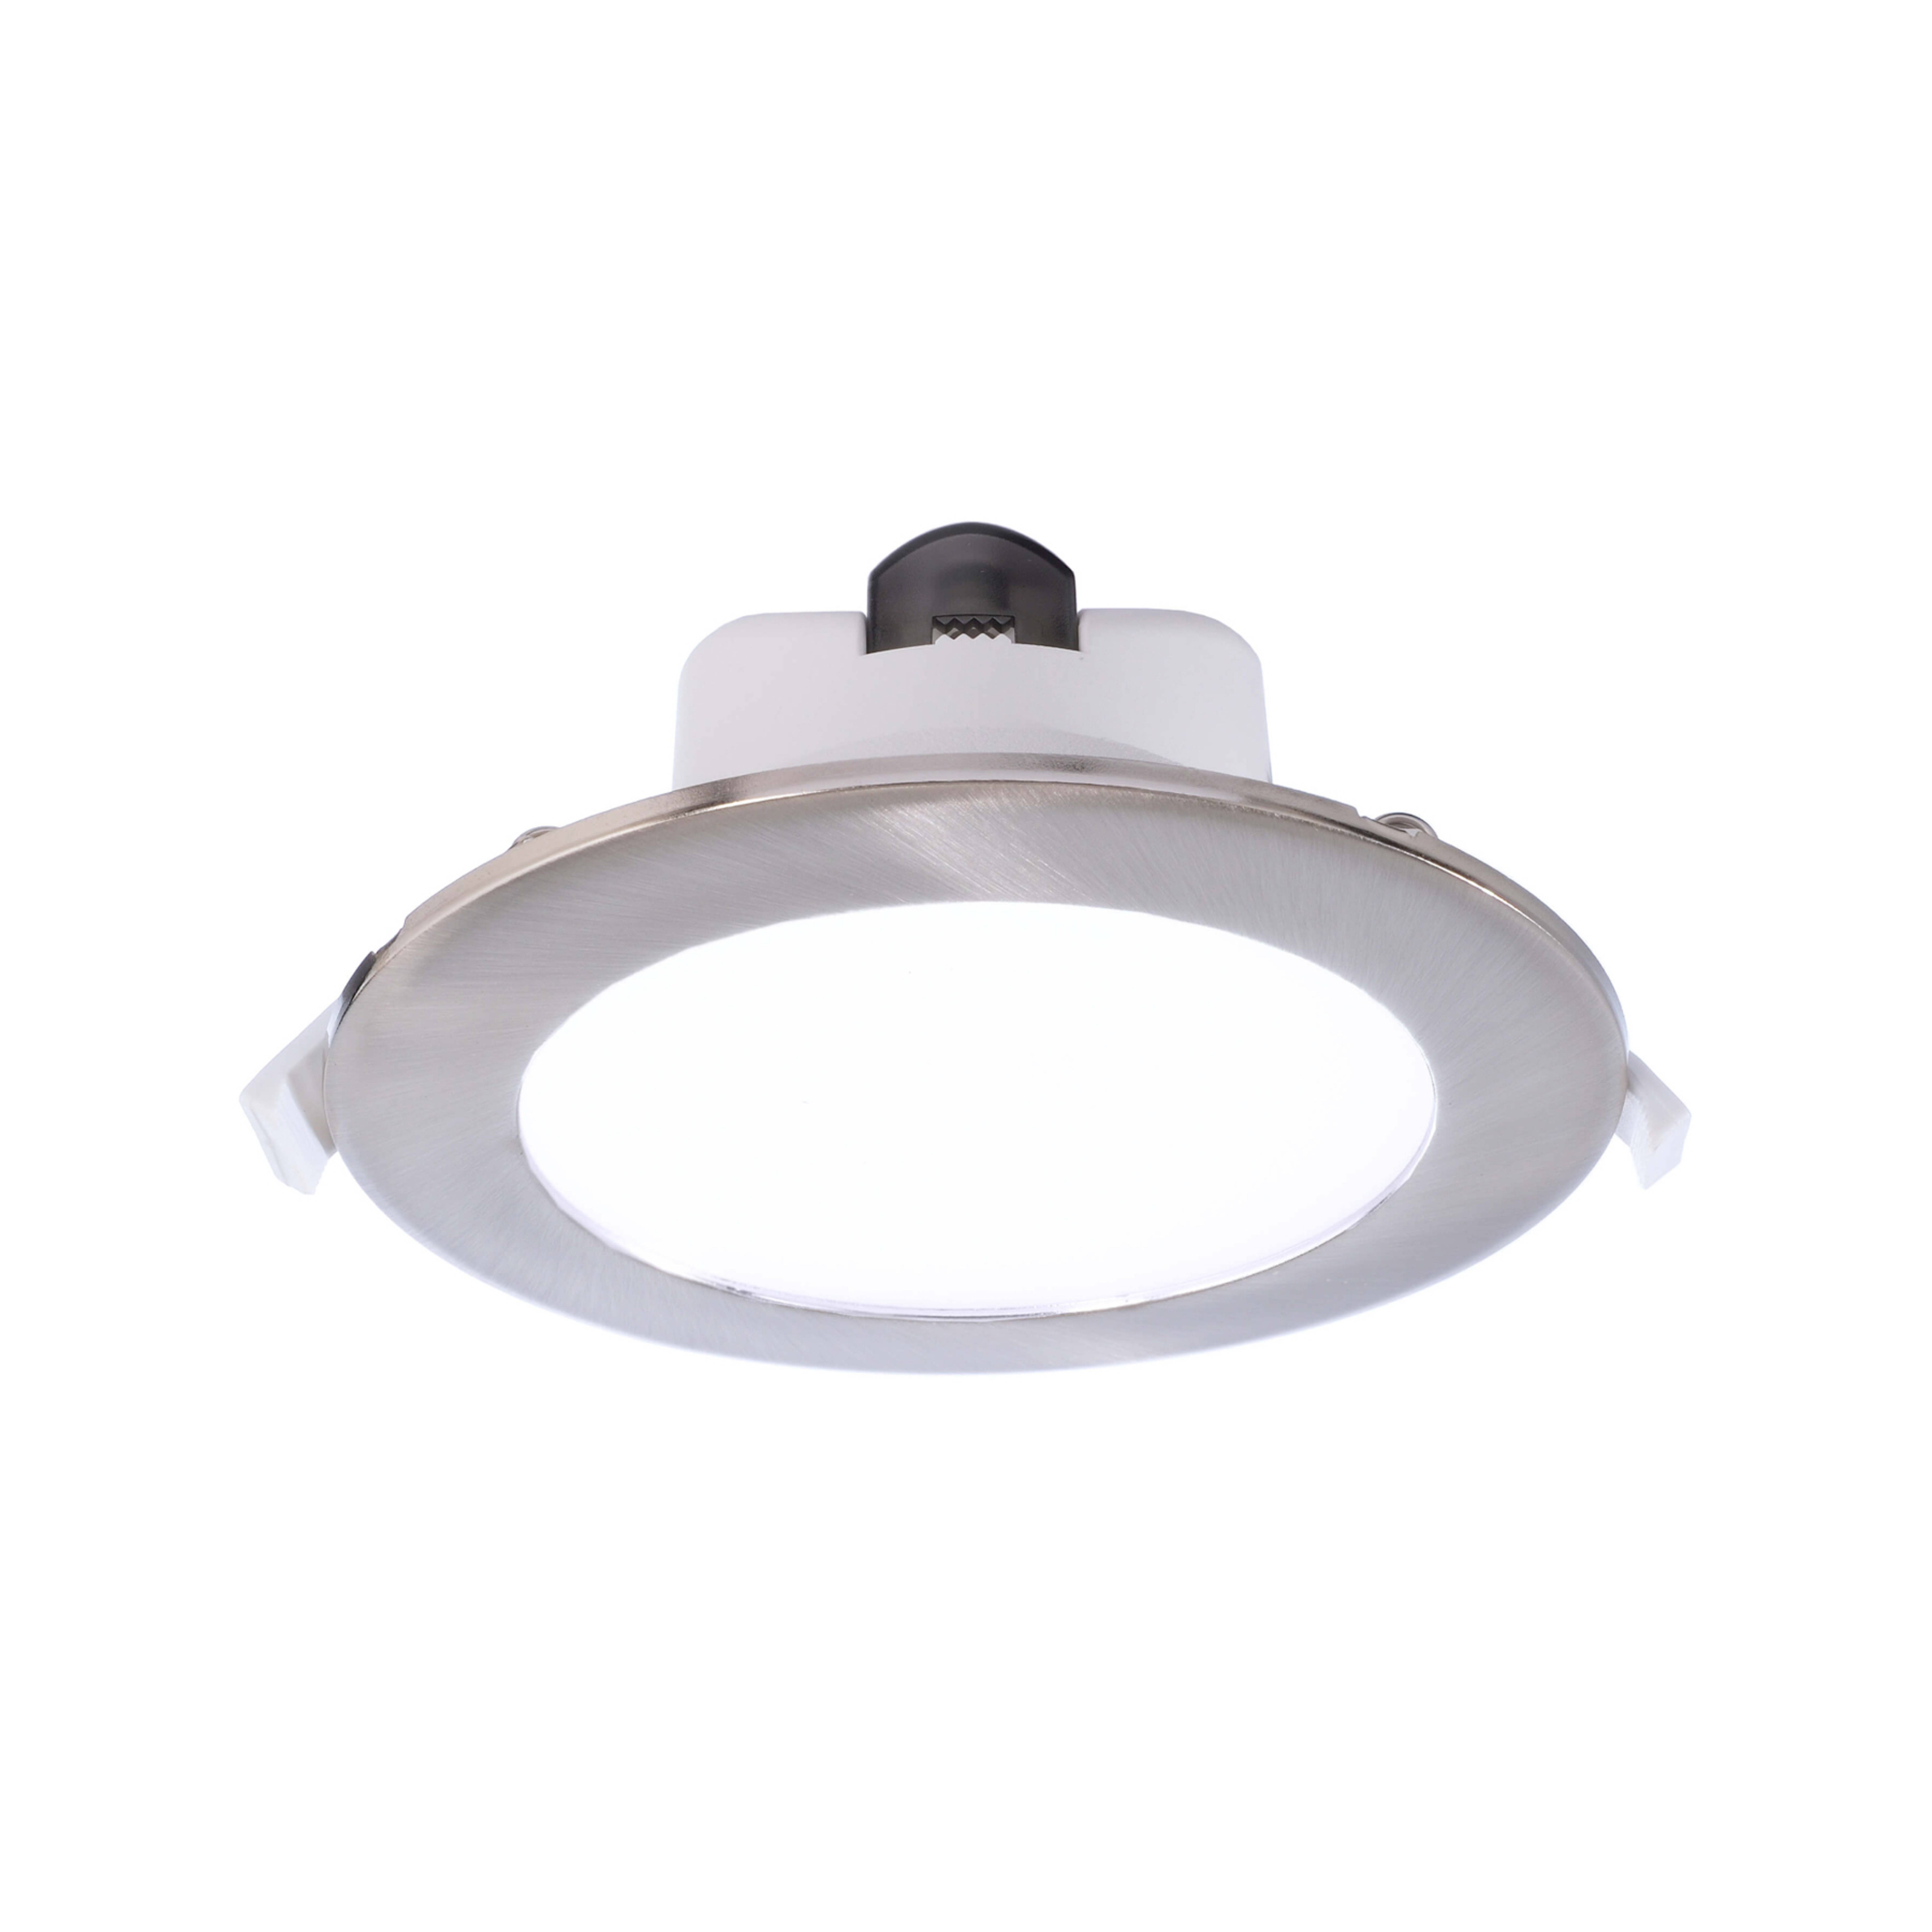 Acrux 145 candeeiro de embutir LED, branco, Ø 17,4 cm